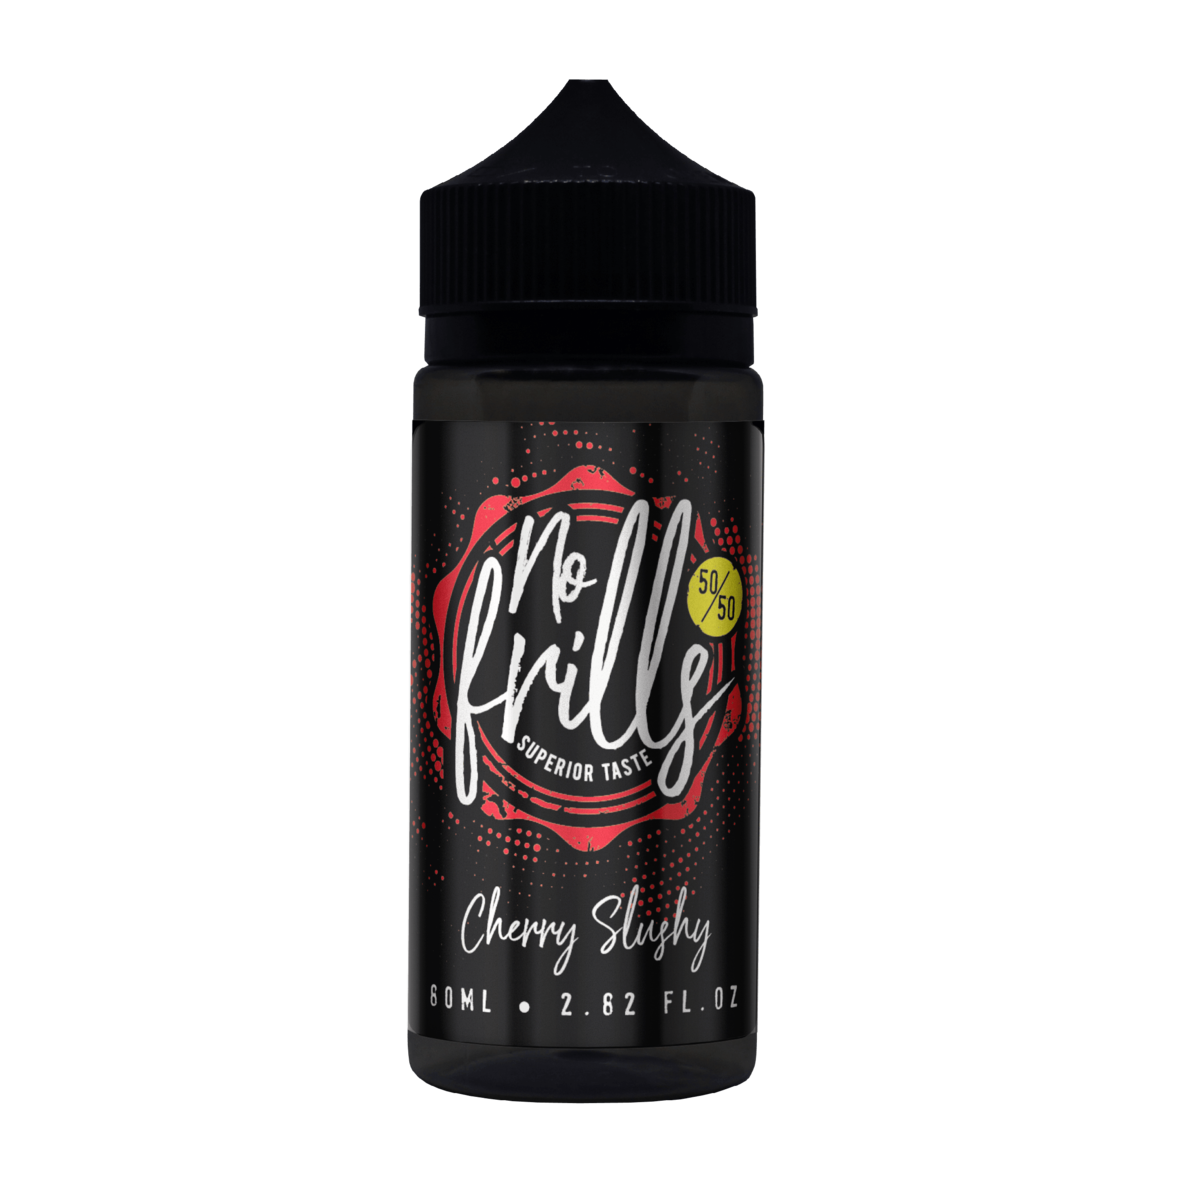 Cherry Slushy E-liquid by No Frills 80ml Shortfill